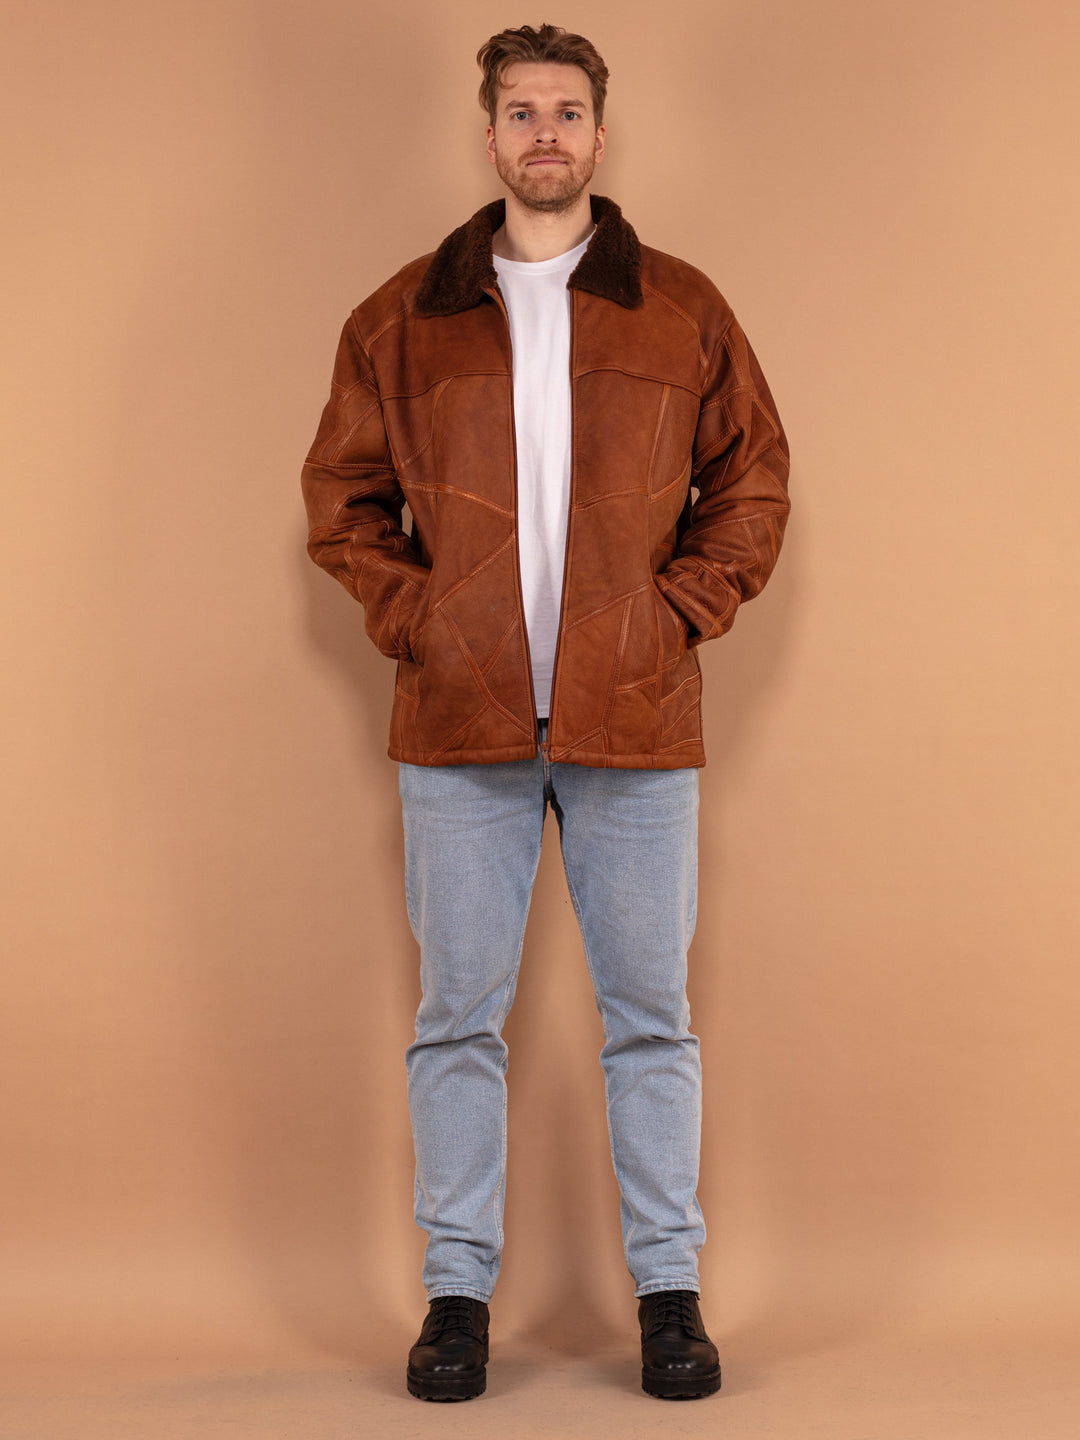 Patchwork Sheepskin Jacket 90s, Size XL, Vintage Brown Sheepskin Leather Coat, 90s Wool Collar Shearling Jacket, Outerwear, Zip Up Coat